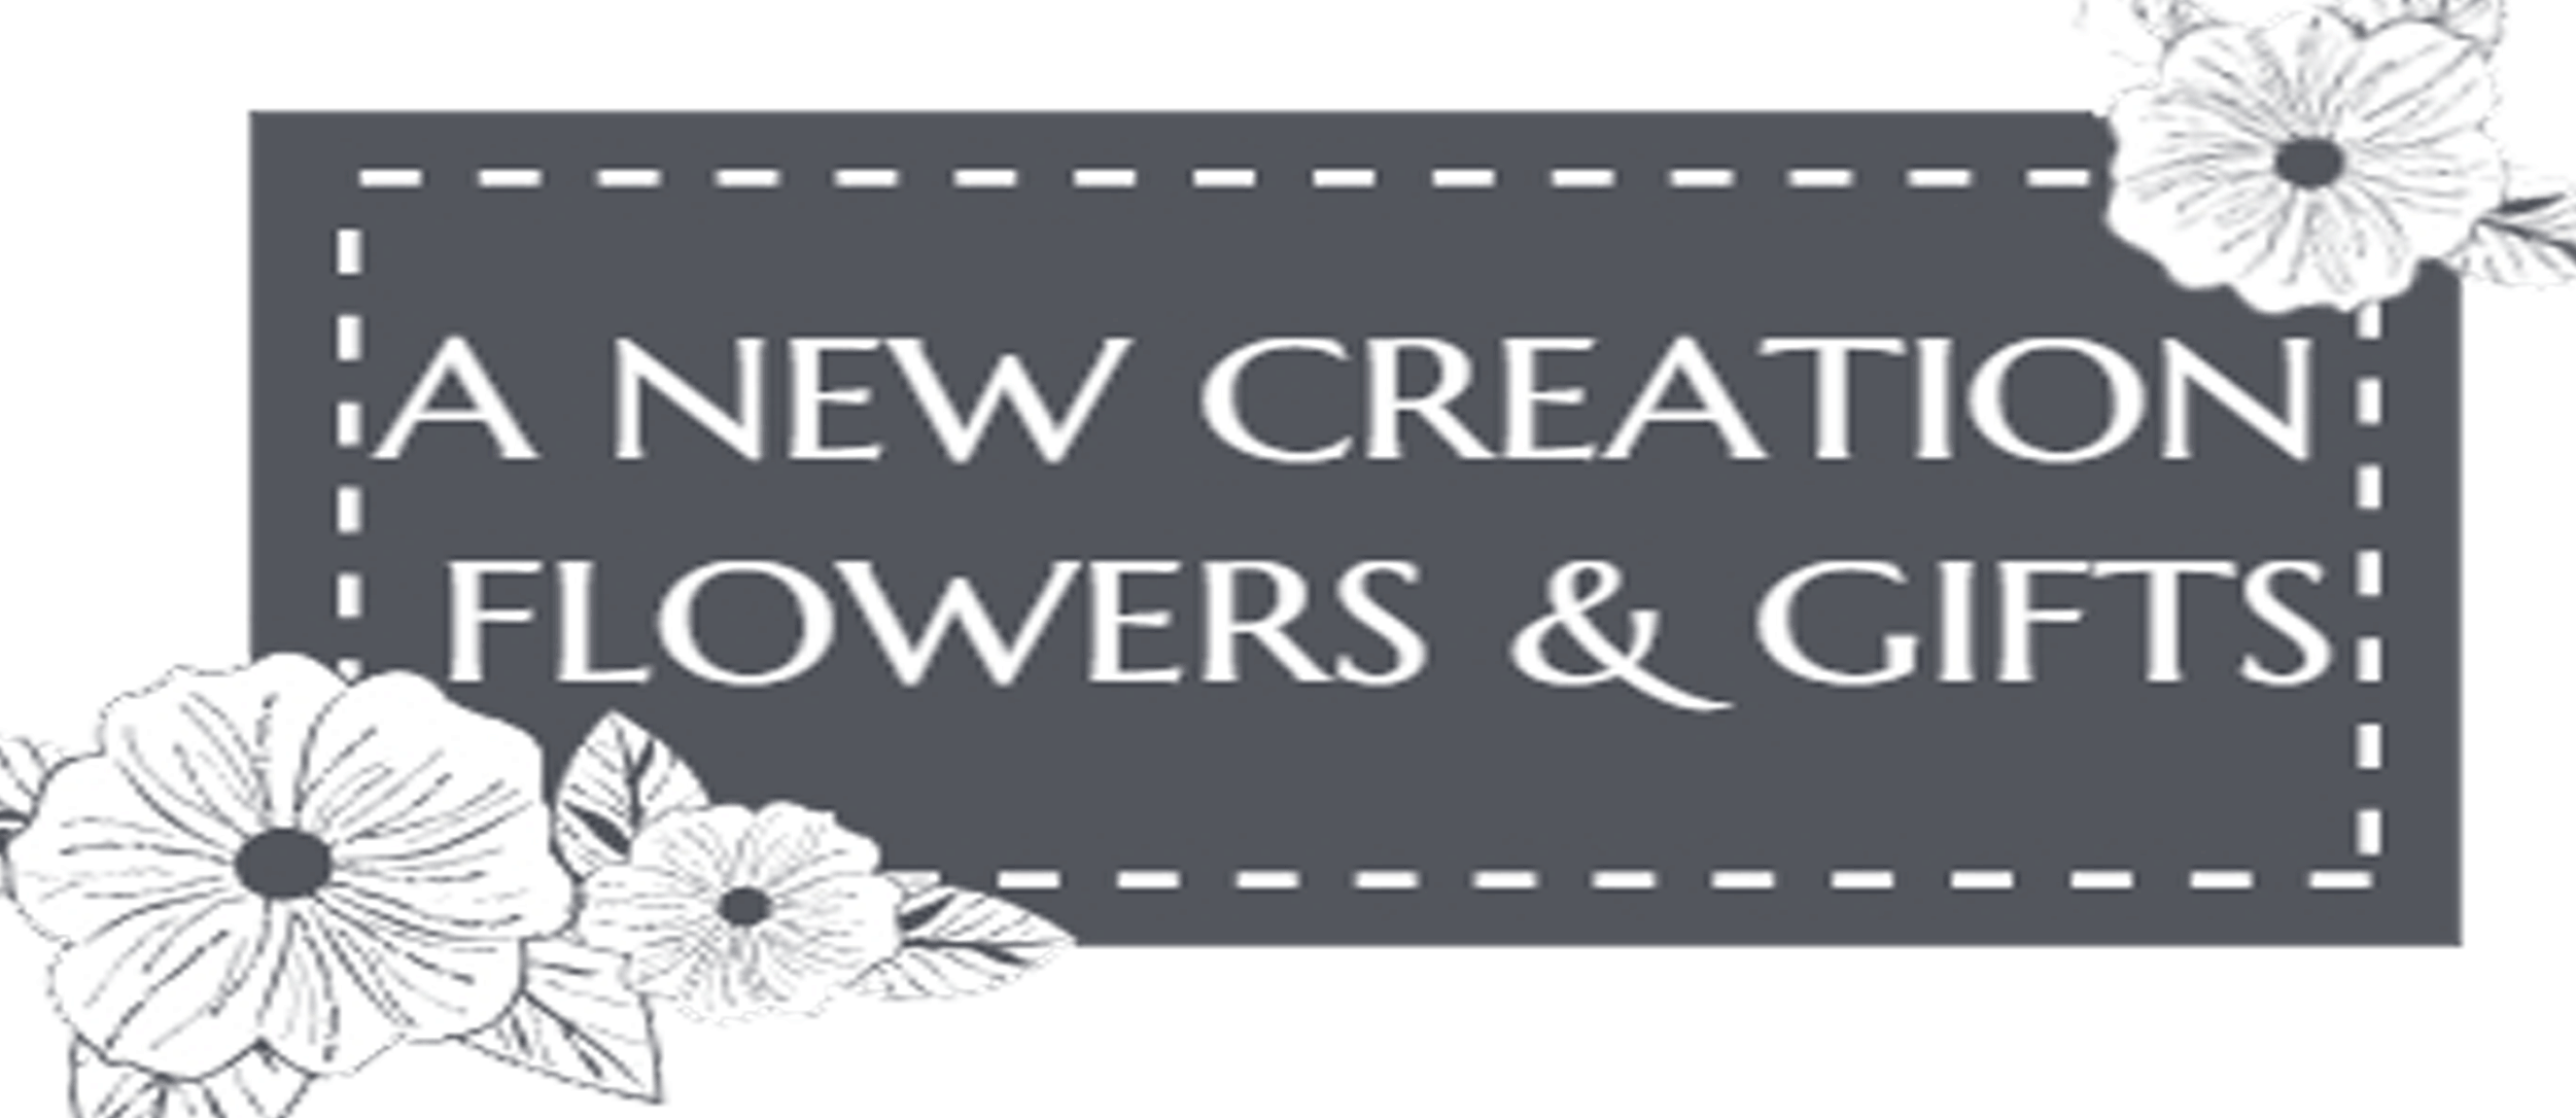 A New Creation Flowers & Gifts - Twentynine Palms, CA 92277 - (760)367-1144 | ShowMeLocal.com